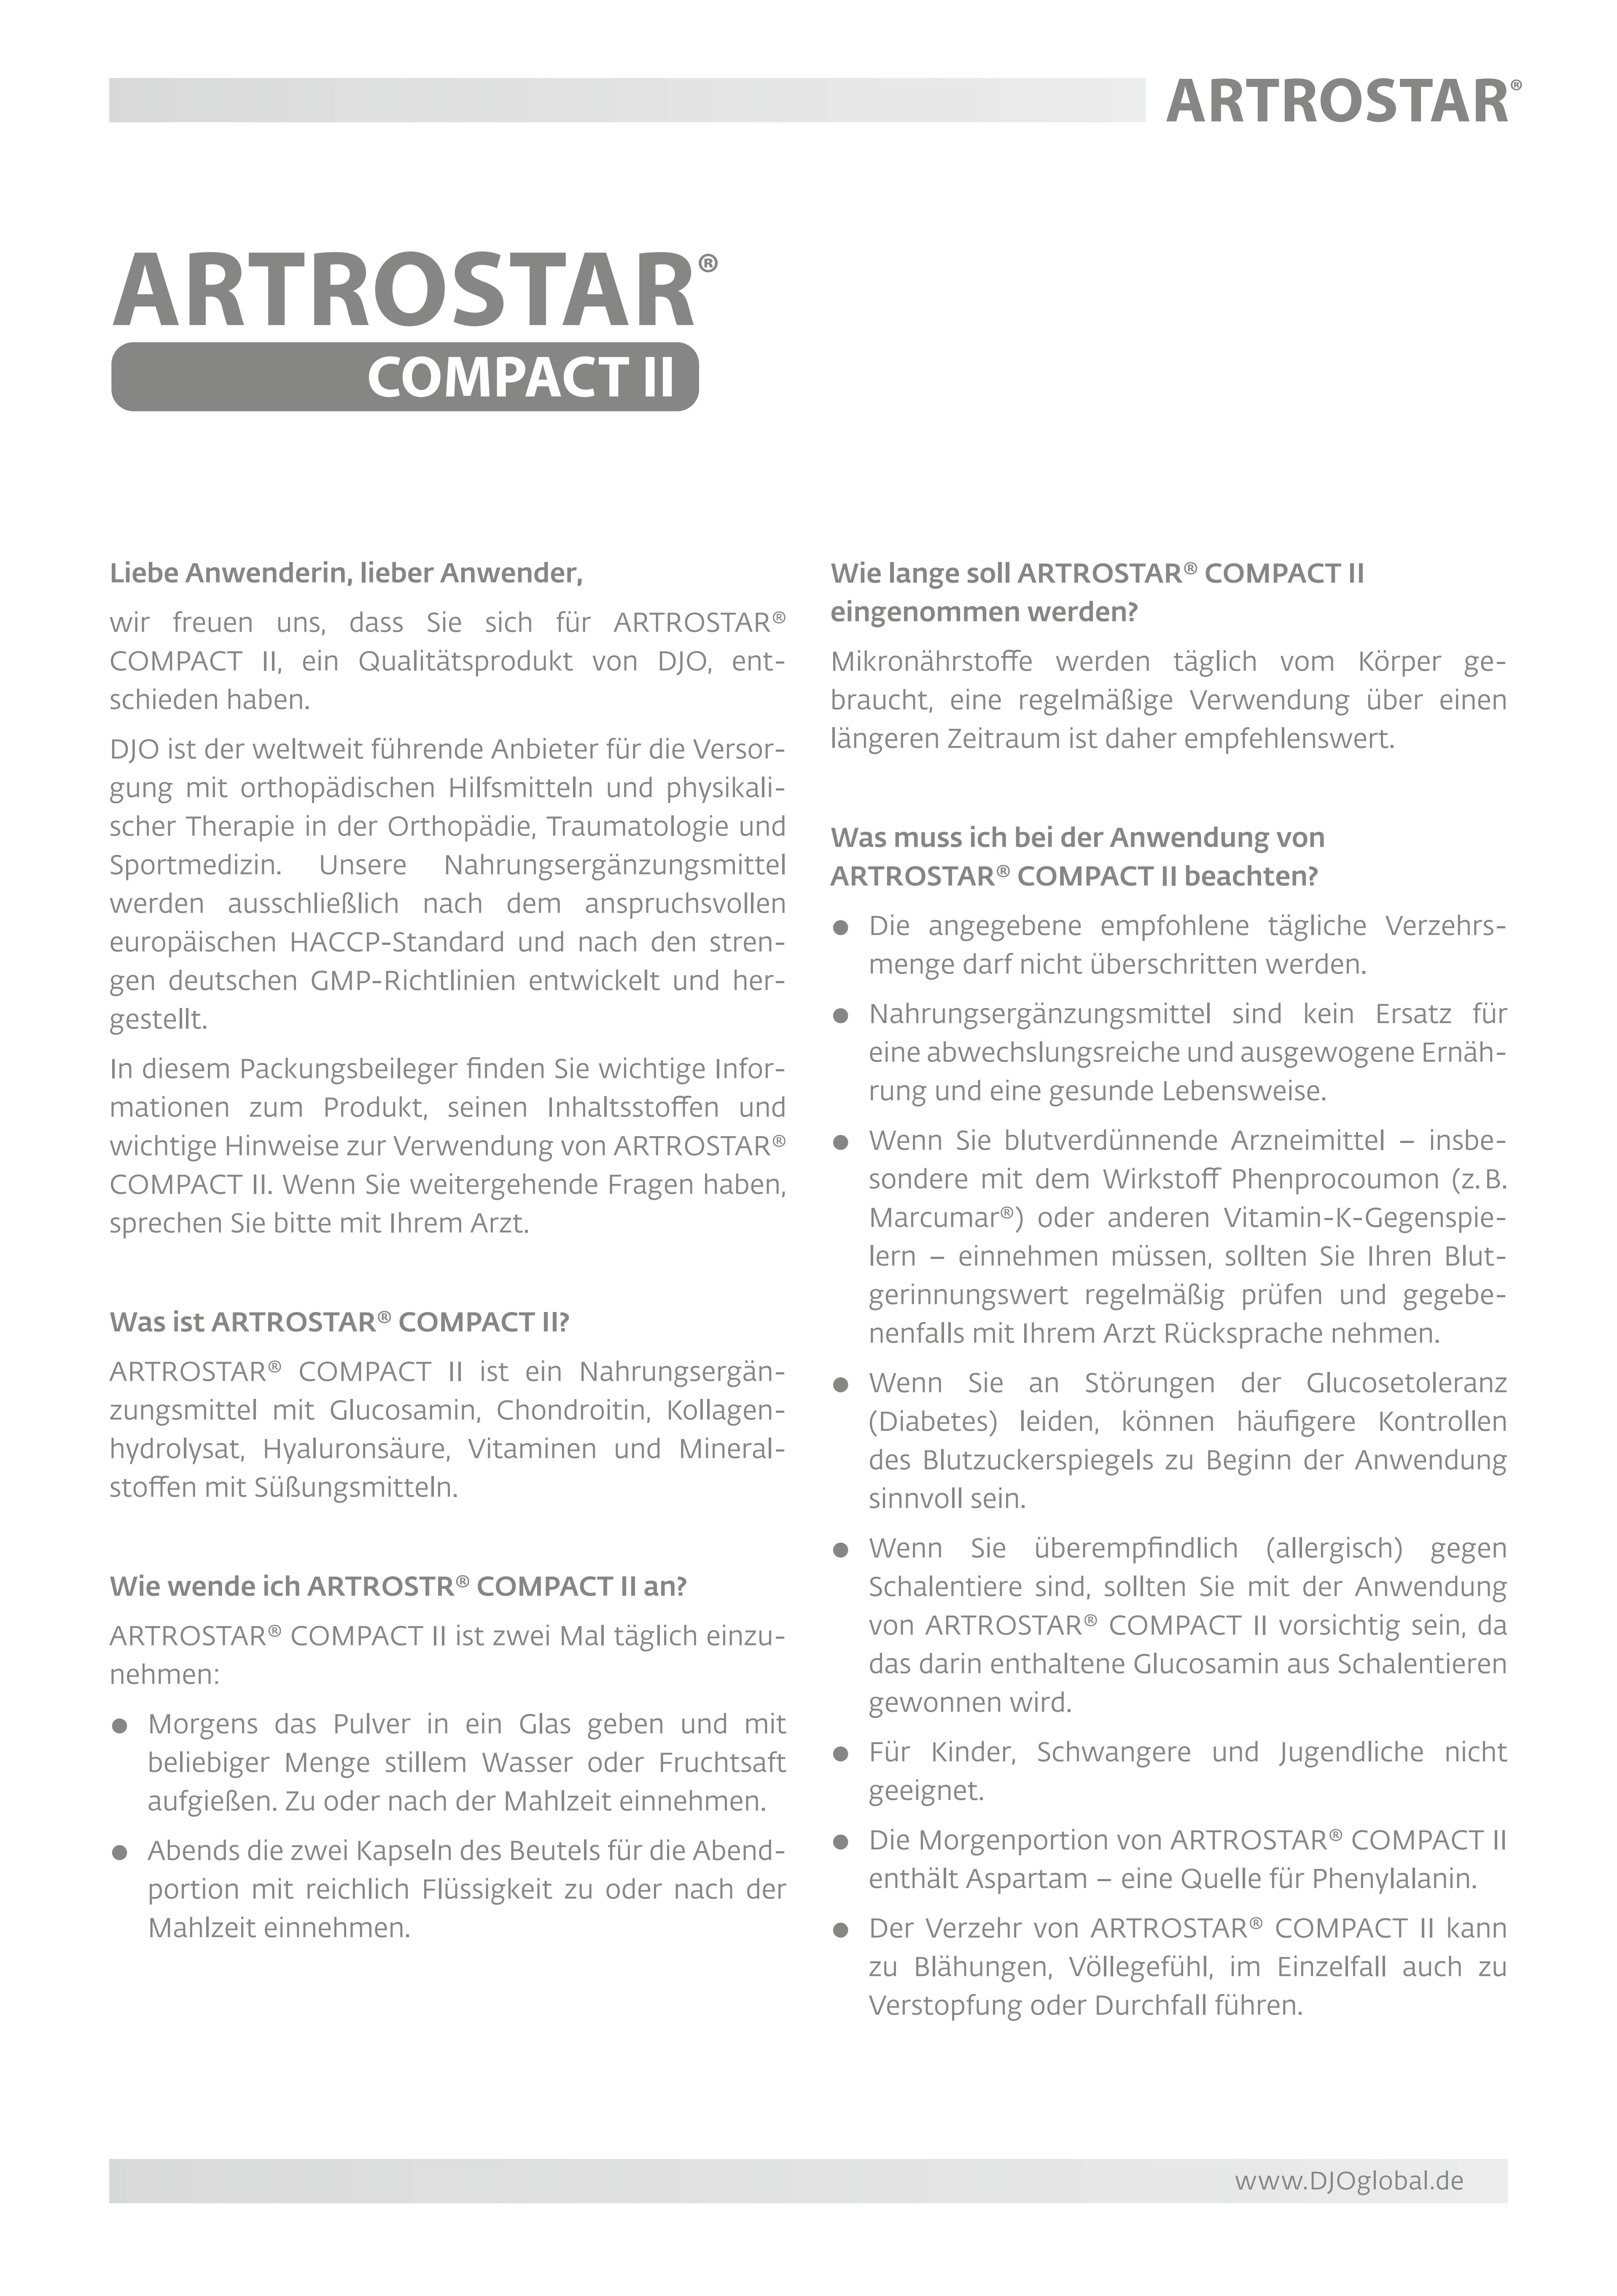 Gebrauchsanleitung_ARTROSTAR_Compact-II_STARC-002-06-21.pdf